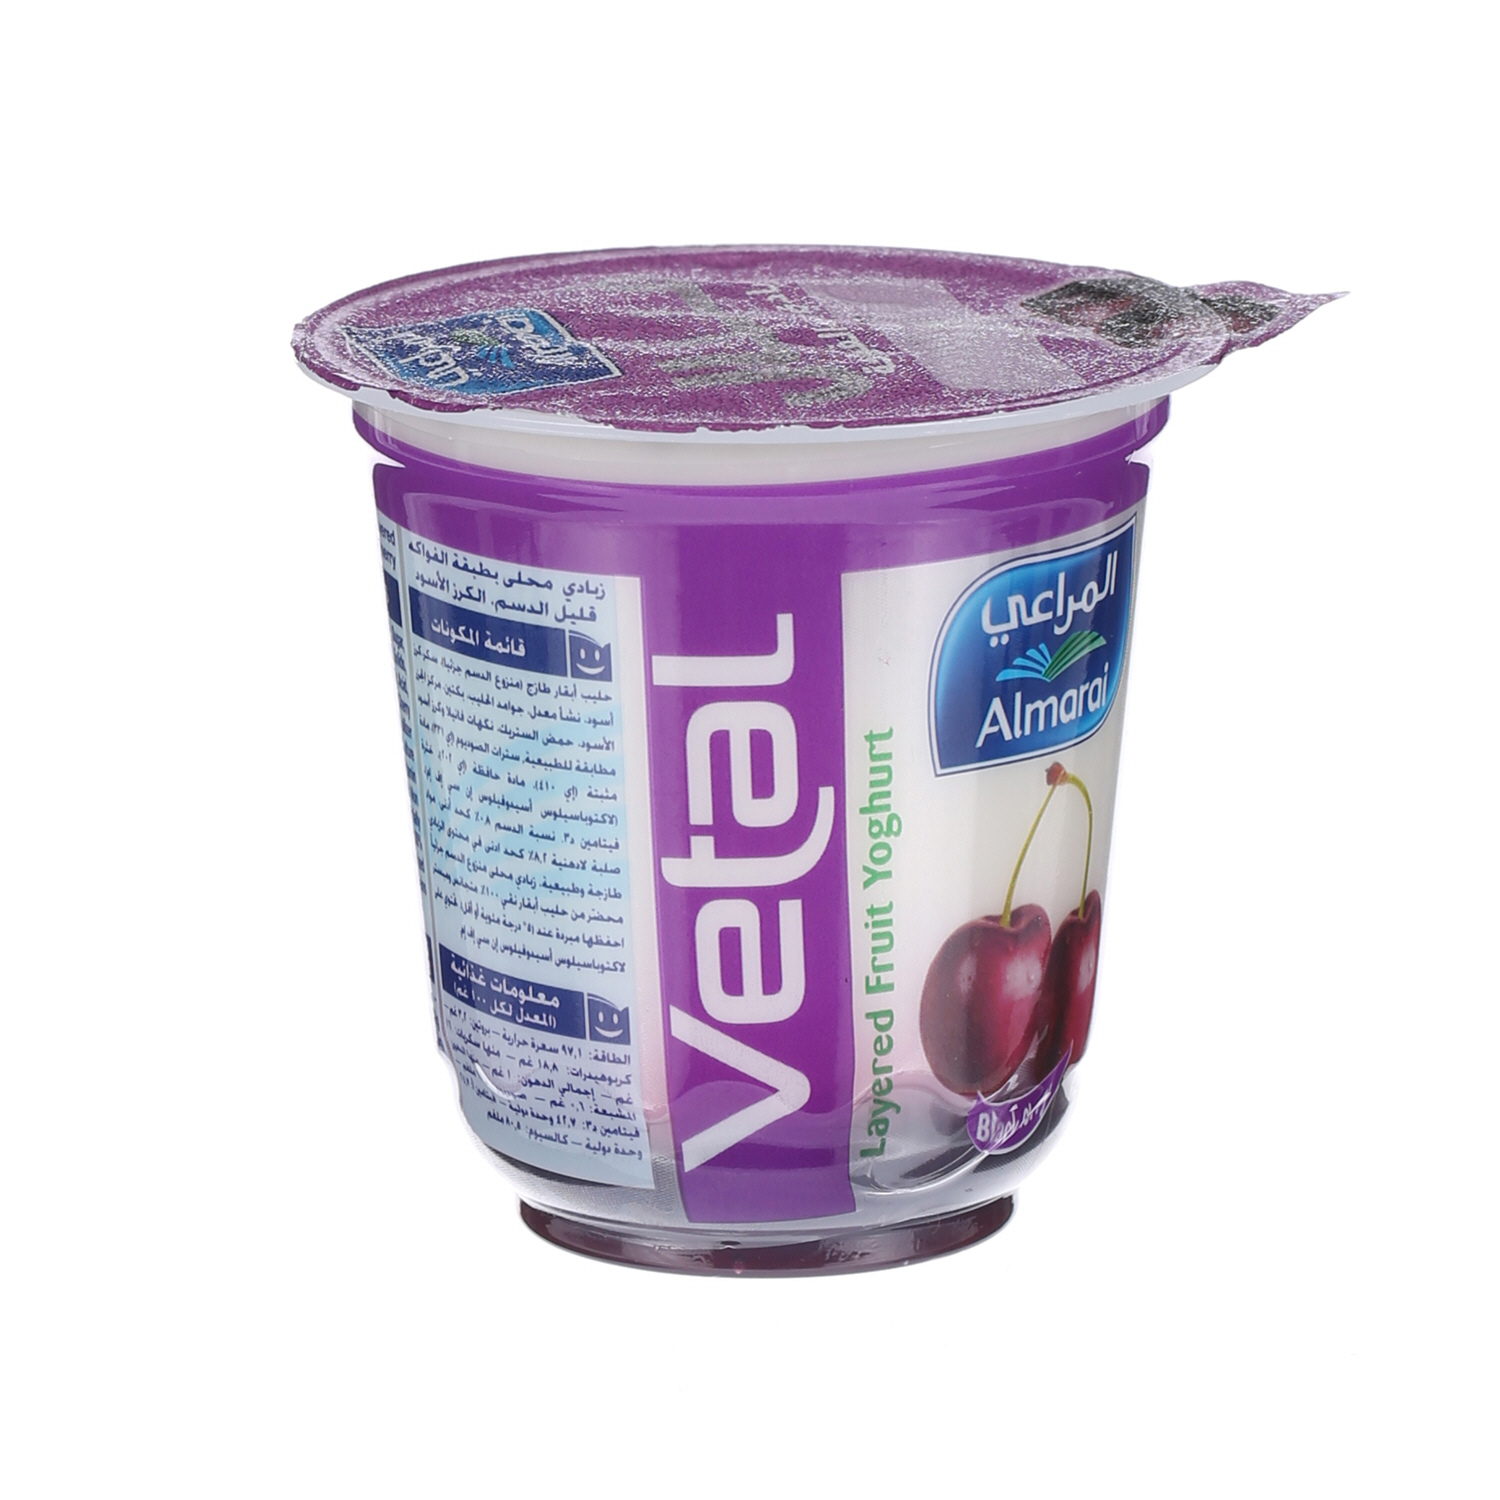 Almarai Vetal Flavoured Youghurt Black Cherry 140gm